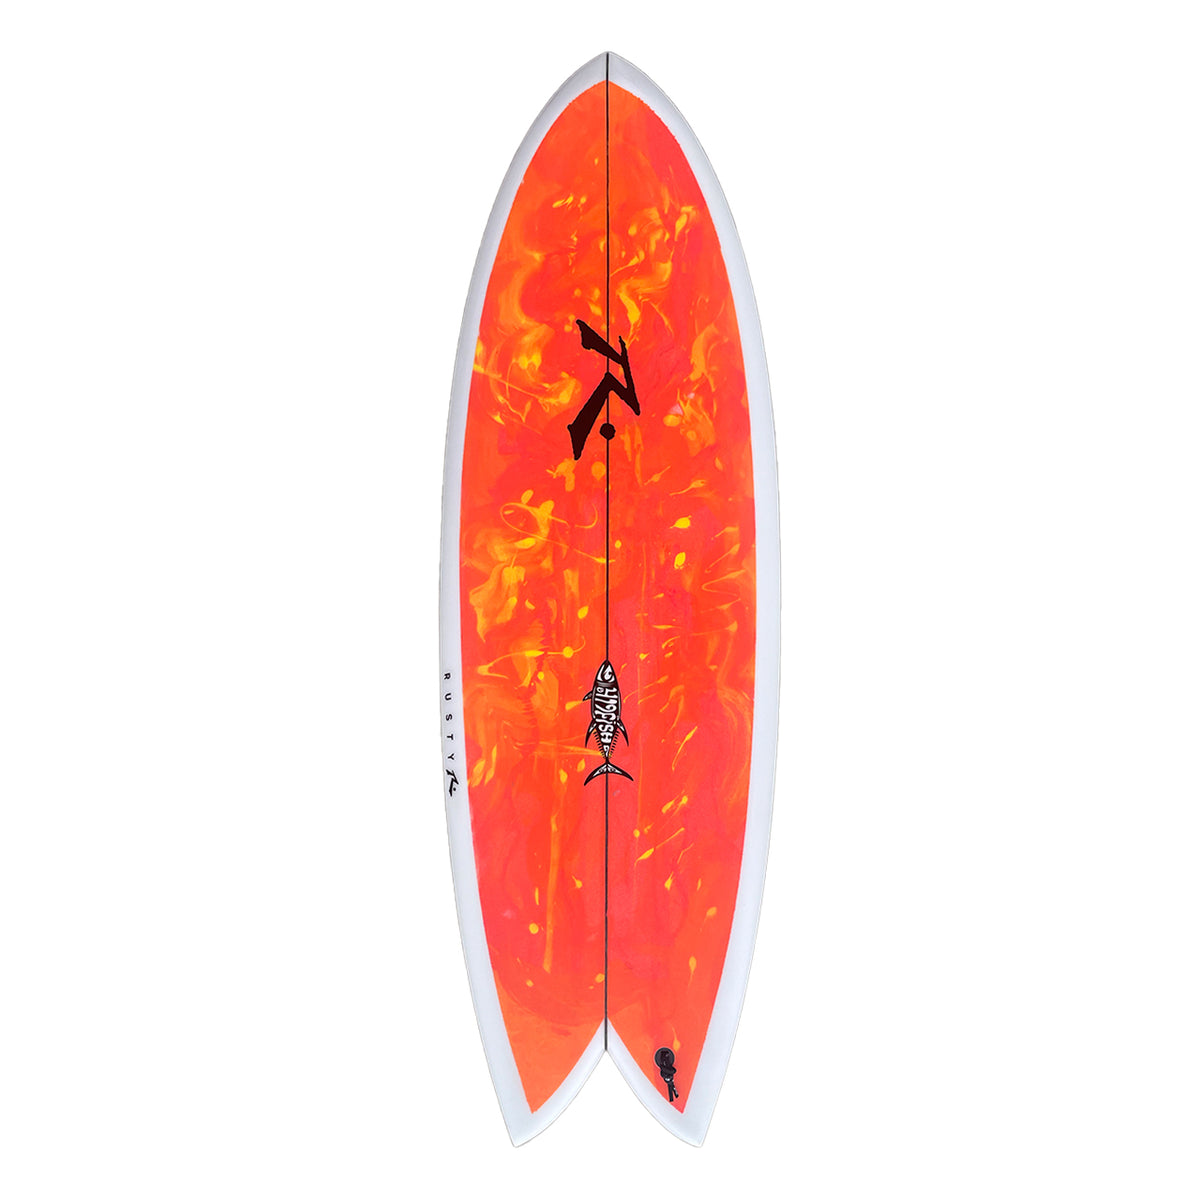 419fish - Alternative - Rusty Surfboards - Top View - Orange Swirl